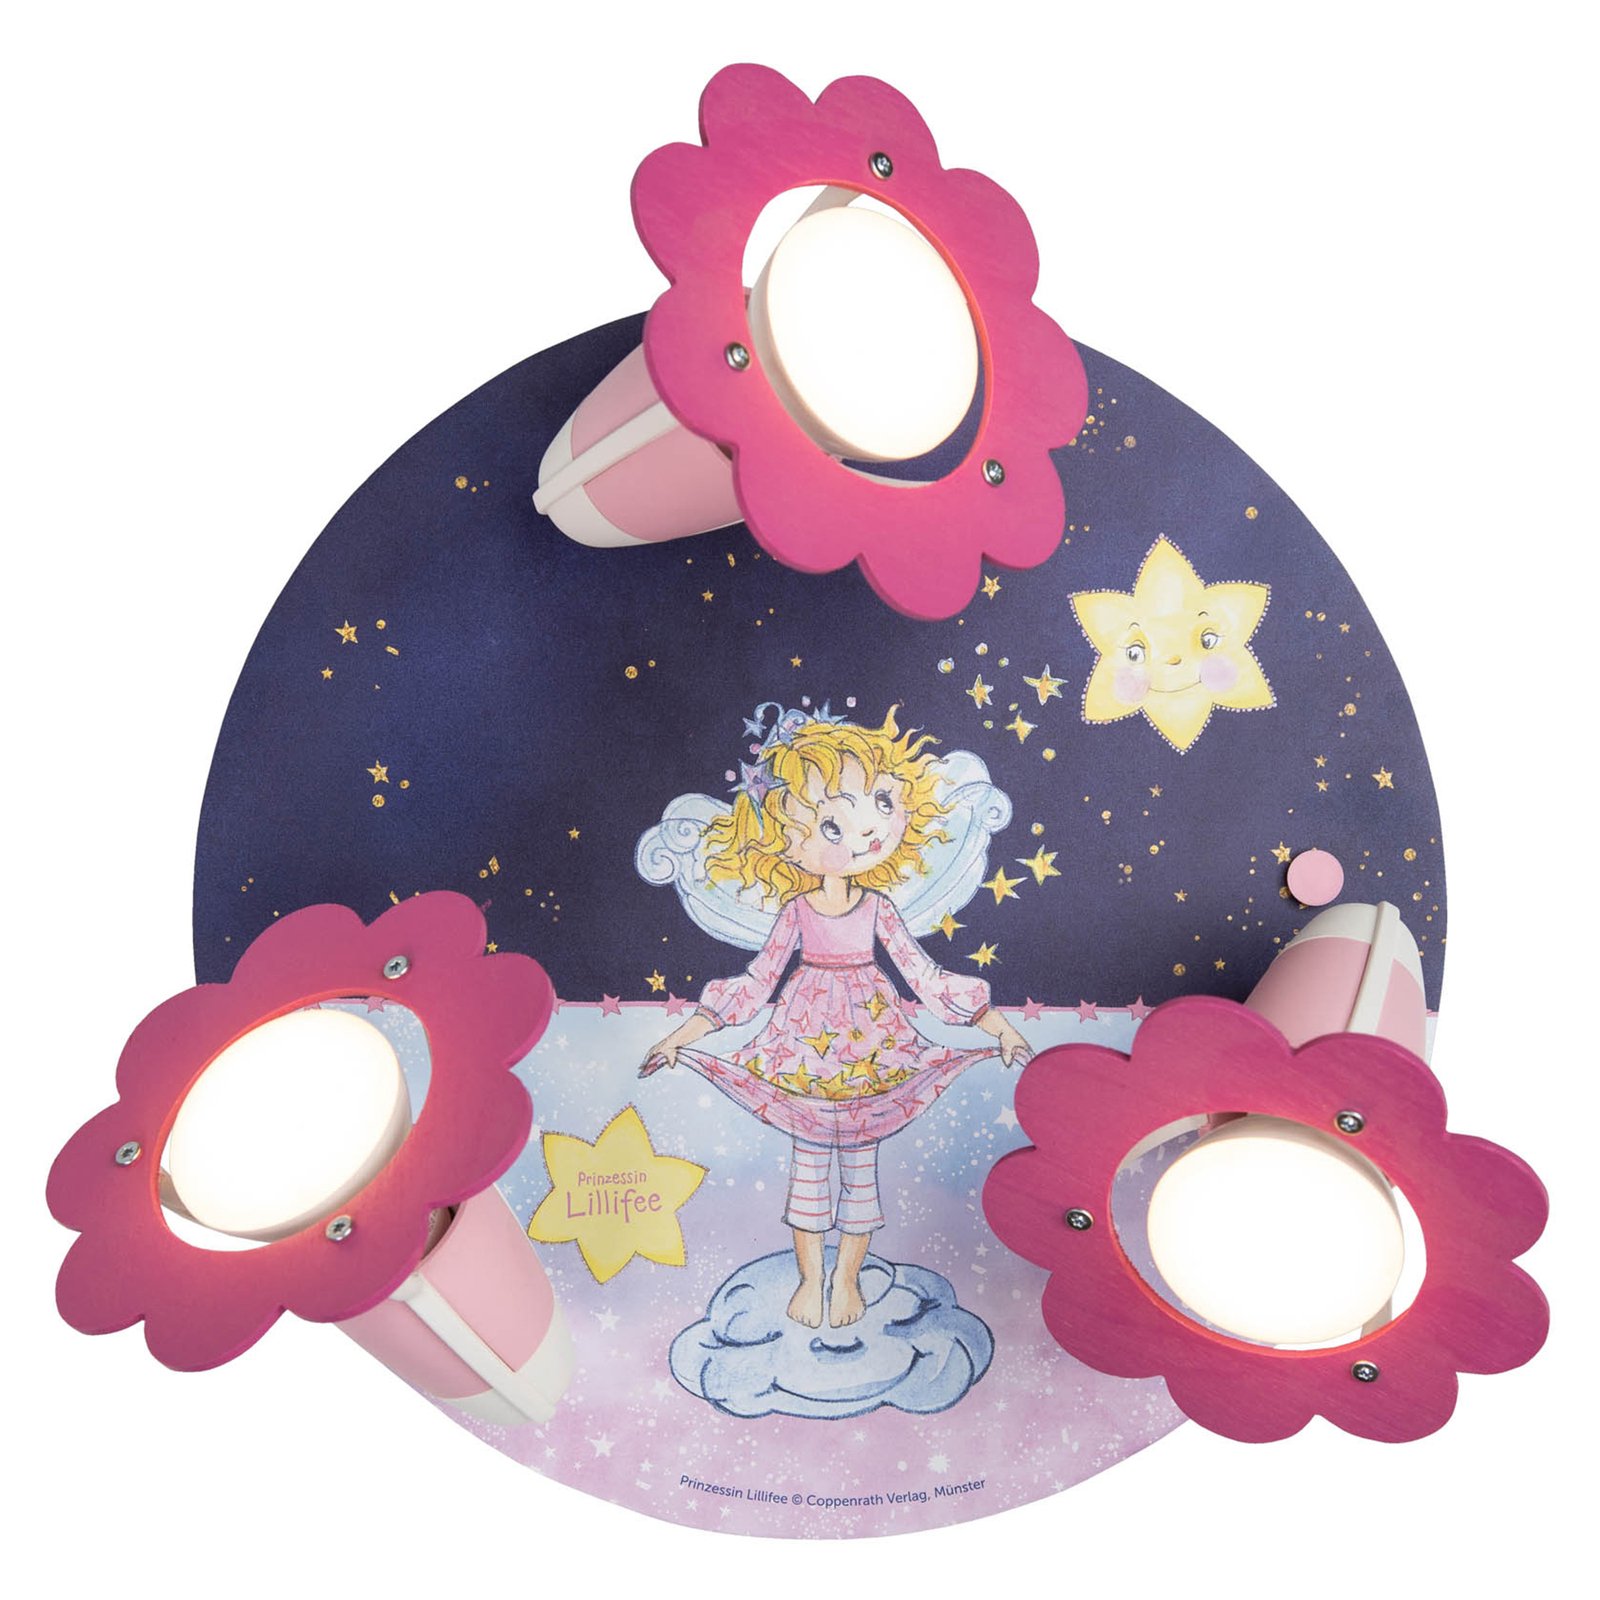 Princess Lillifee ceiling light with stars